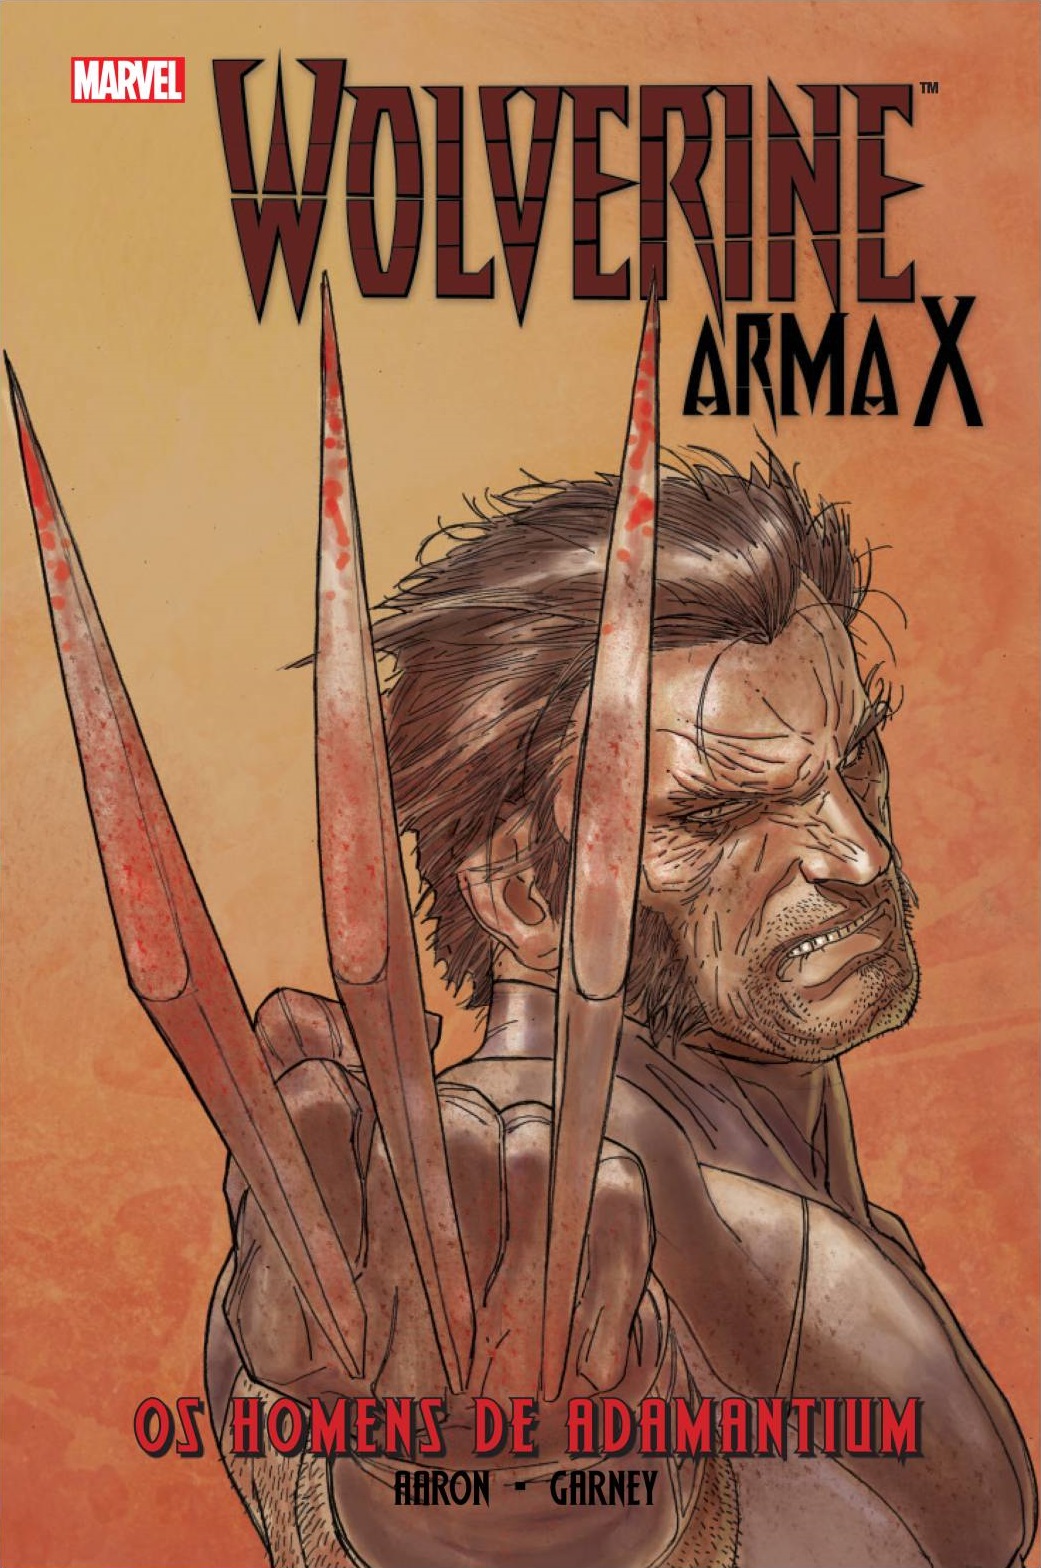 WOLVERINE ARMA X vol. 1: Os Homens de Adamantium